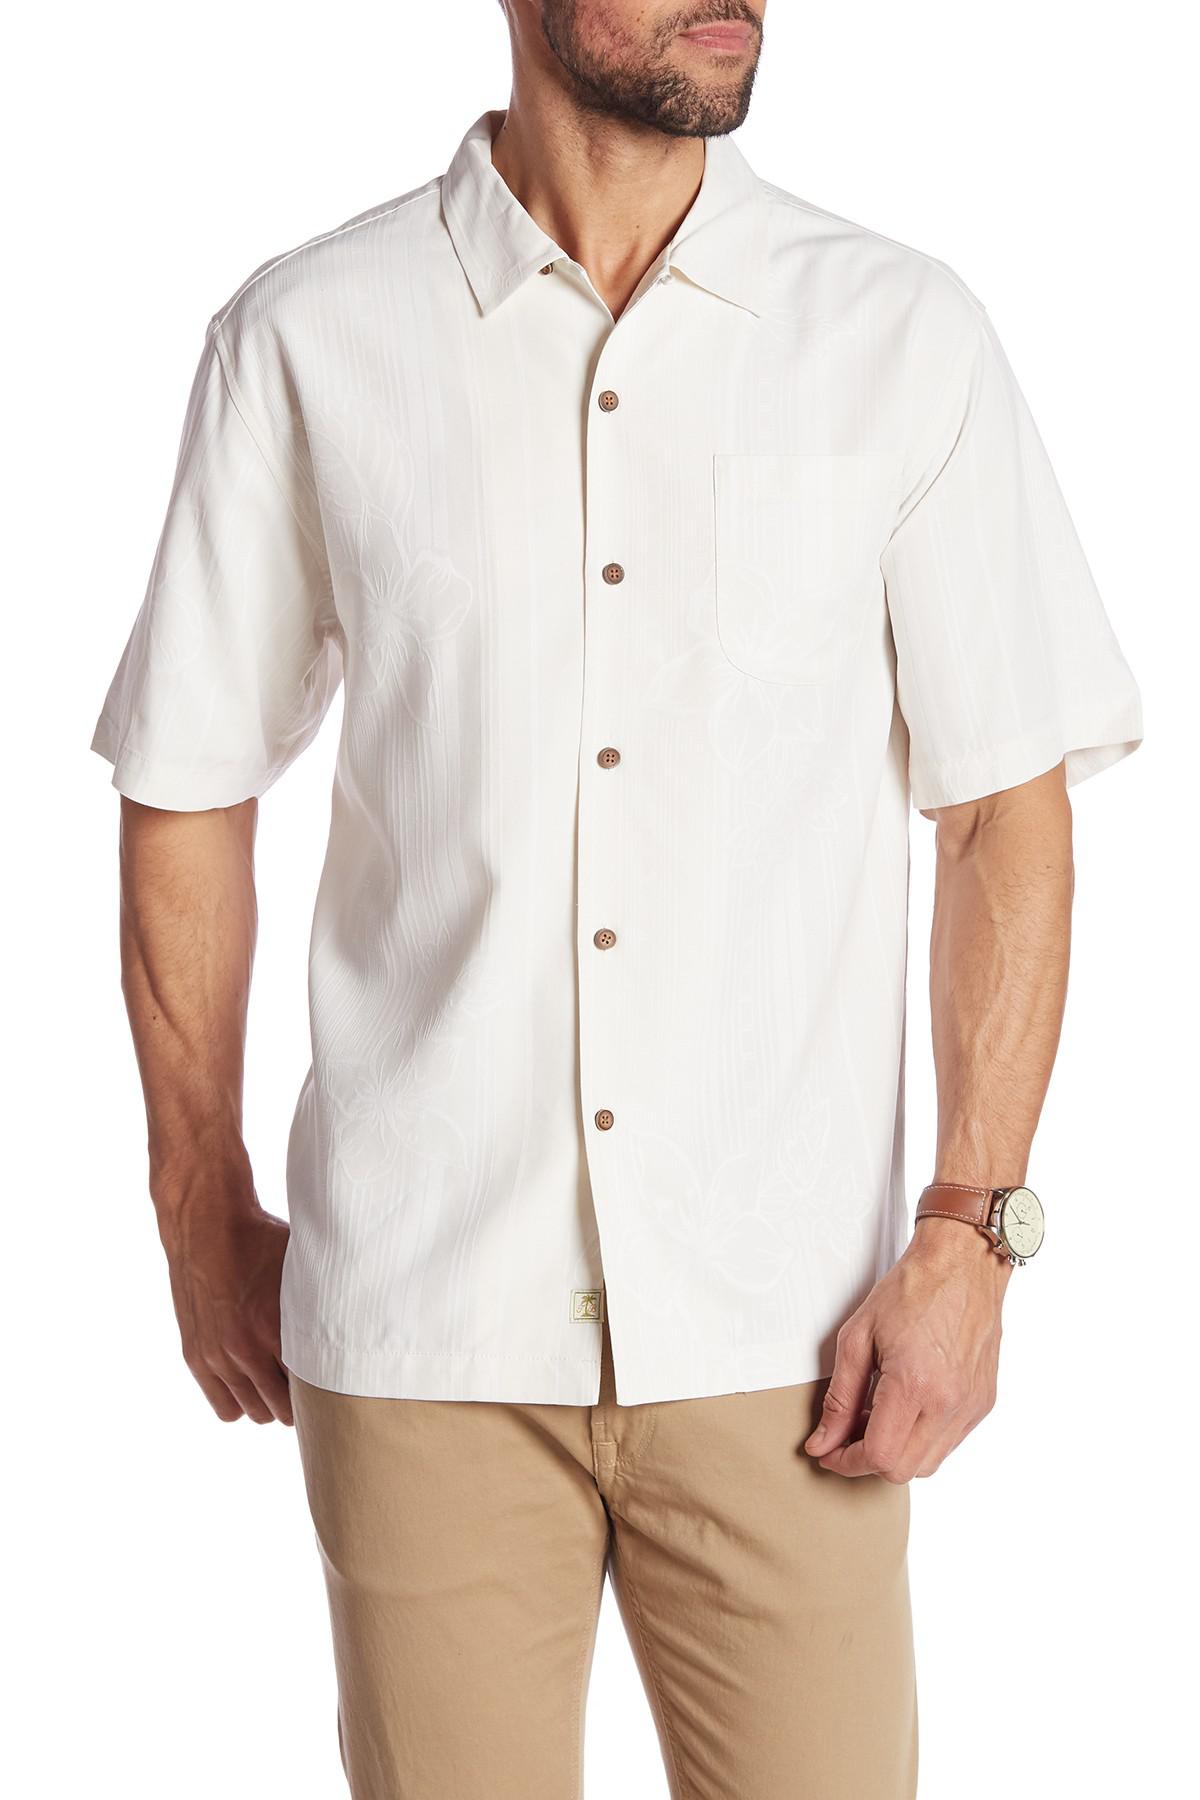 Tommy Bahama Jingle Bell Dock Short Sleeve Silk Original Fit Shirt in ...